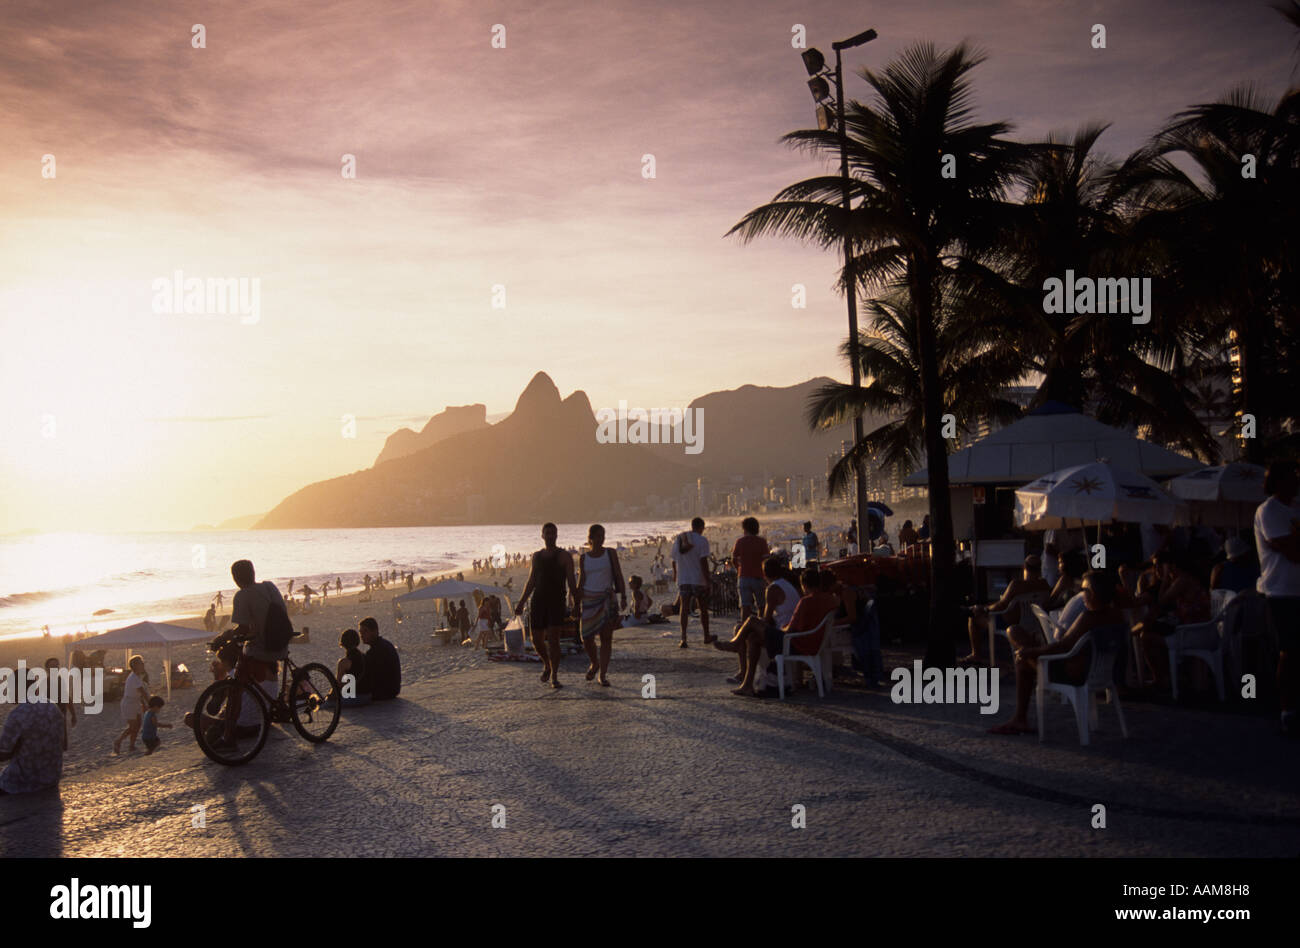 Sunset at Ipanema beach Rio de Janeiro Brazil People enjoying leisure time at Ipanema calçadão Stock Photo